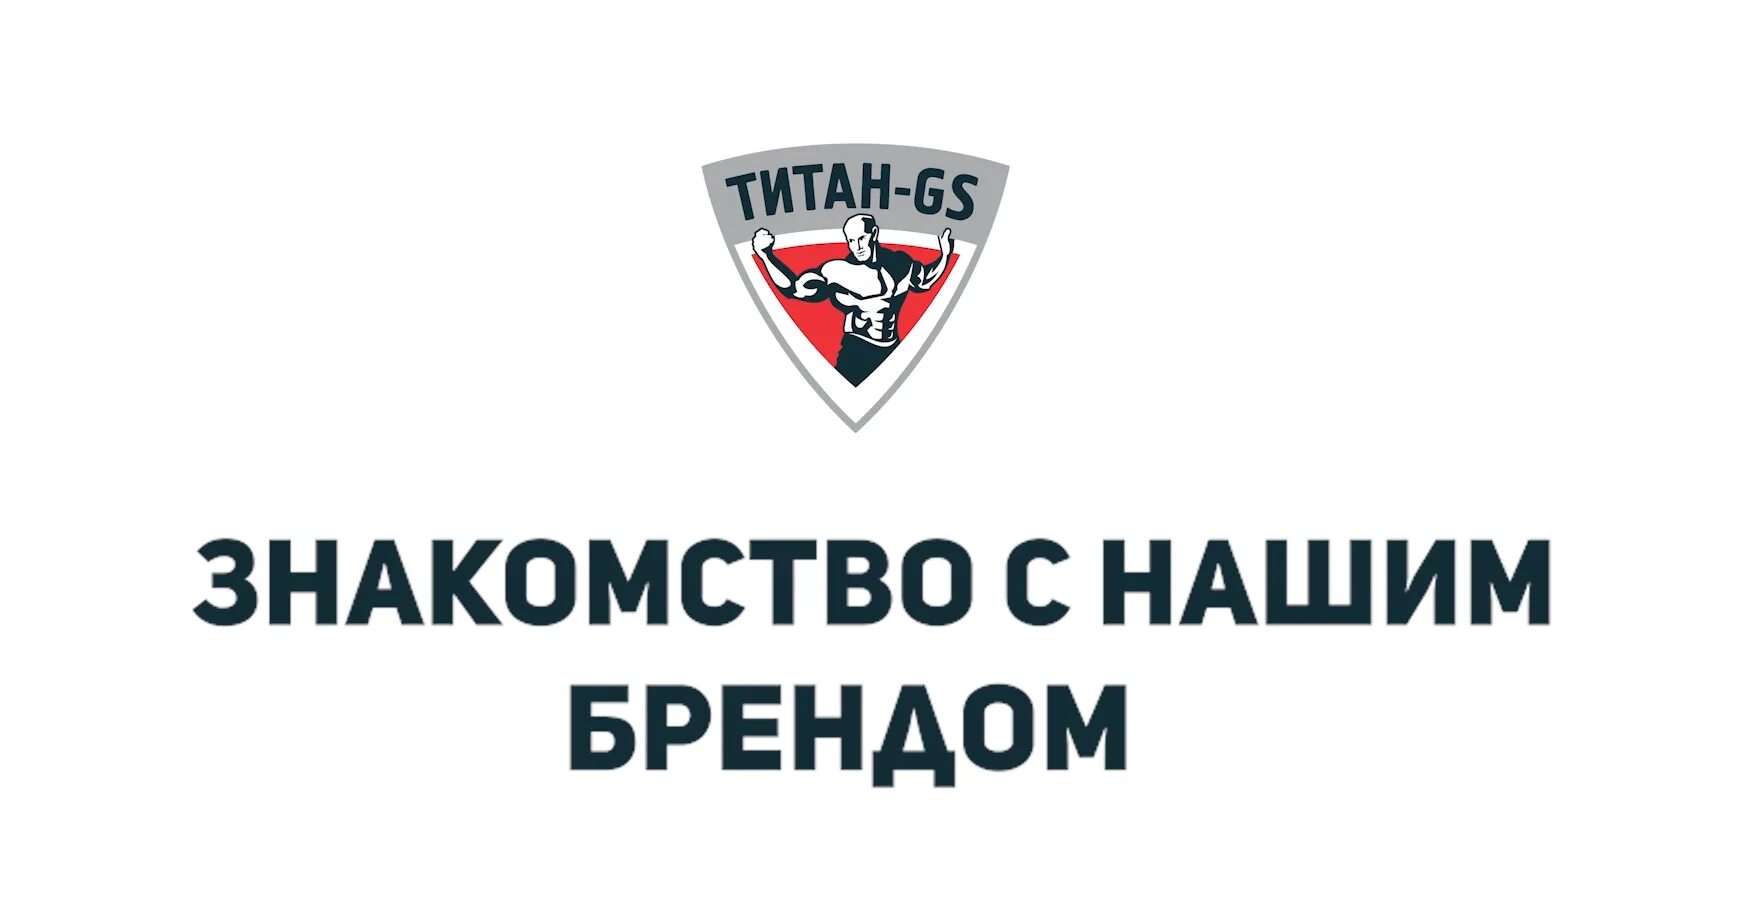 Титан ГС. Логотип Титан GS. Титан-ГС Ярославль. Подсистема Титан. Титан гс сайт